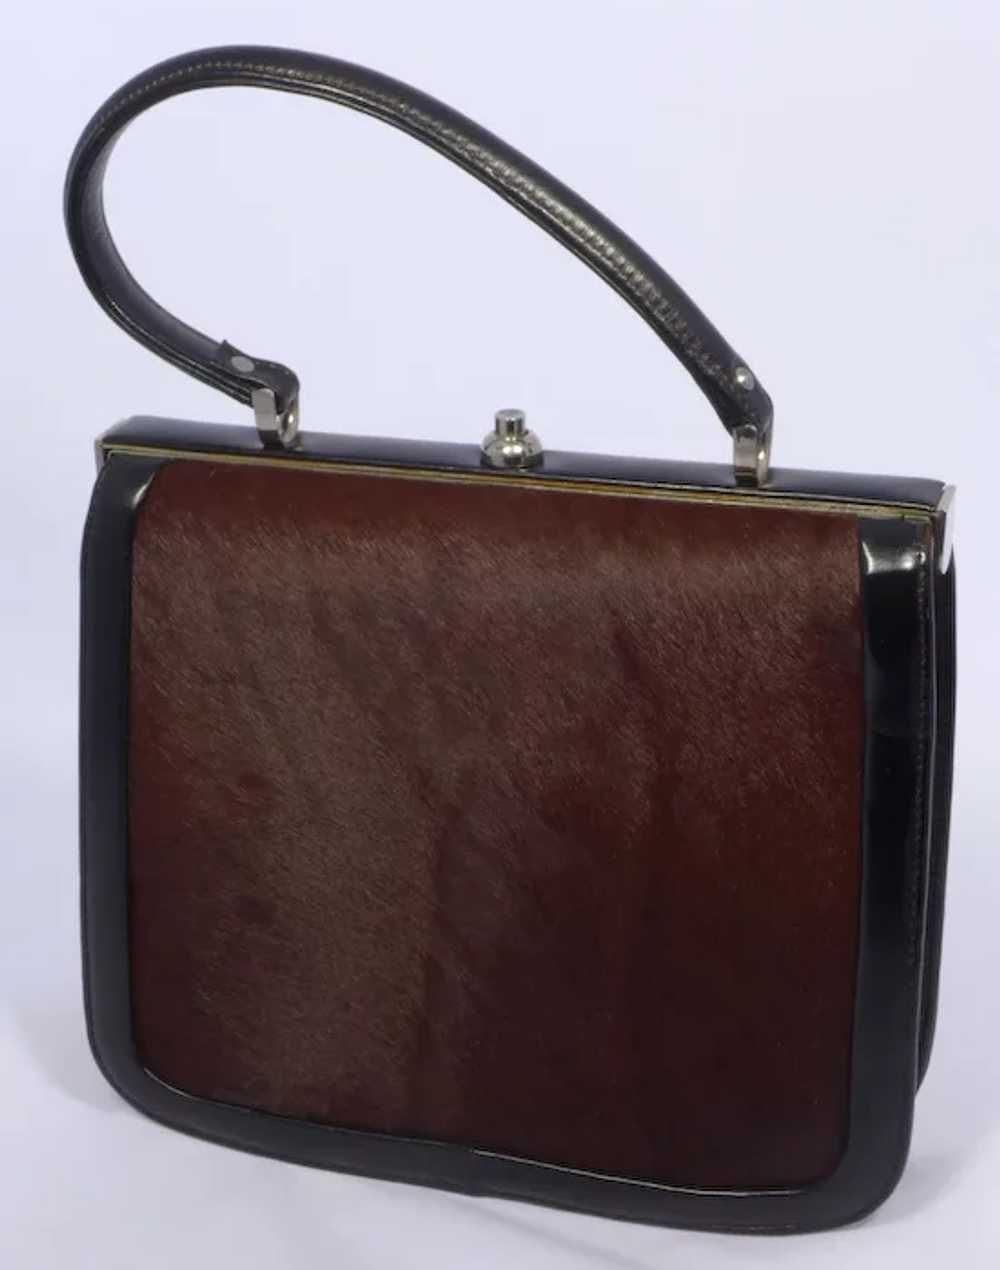 Vintage 1960s Pony Hair Handbag Brown and Black - image 2